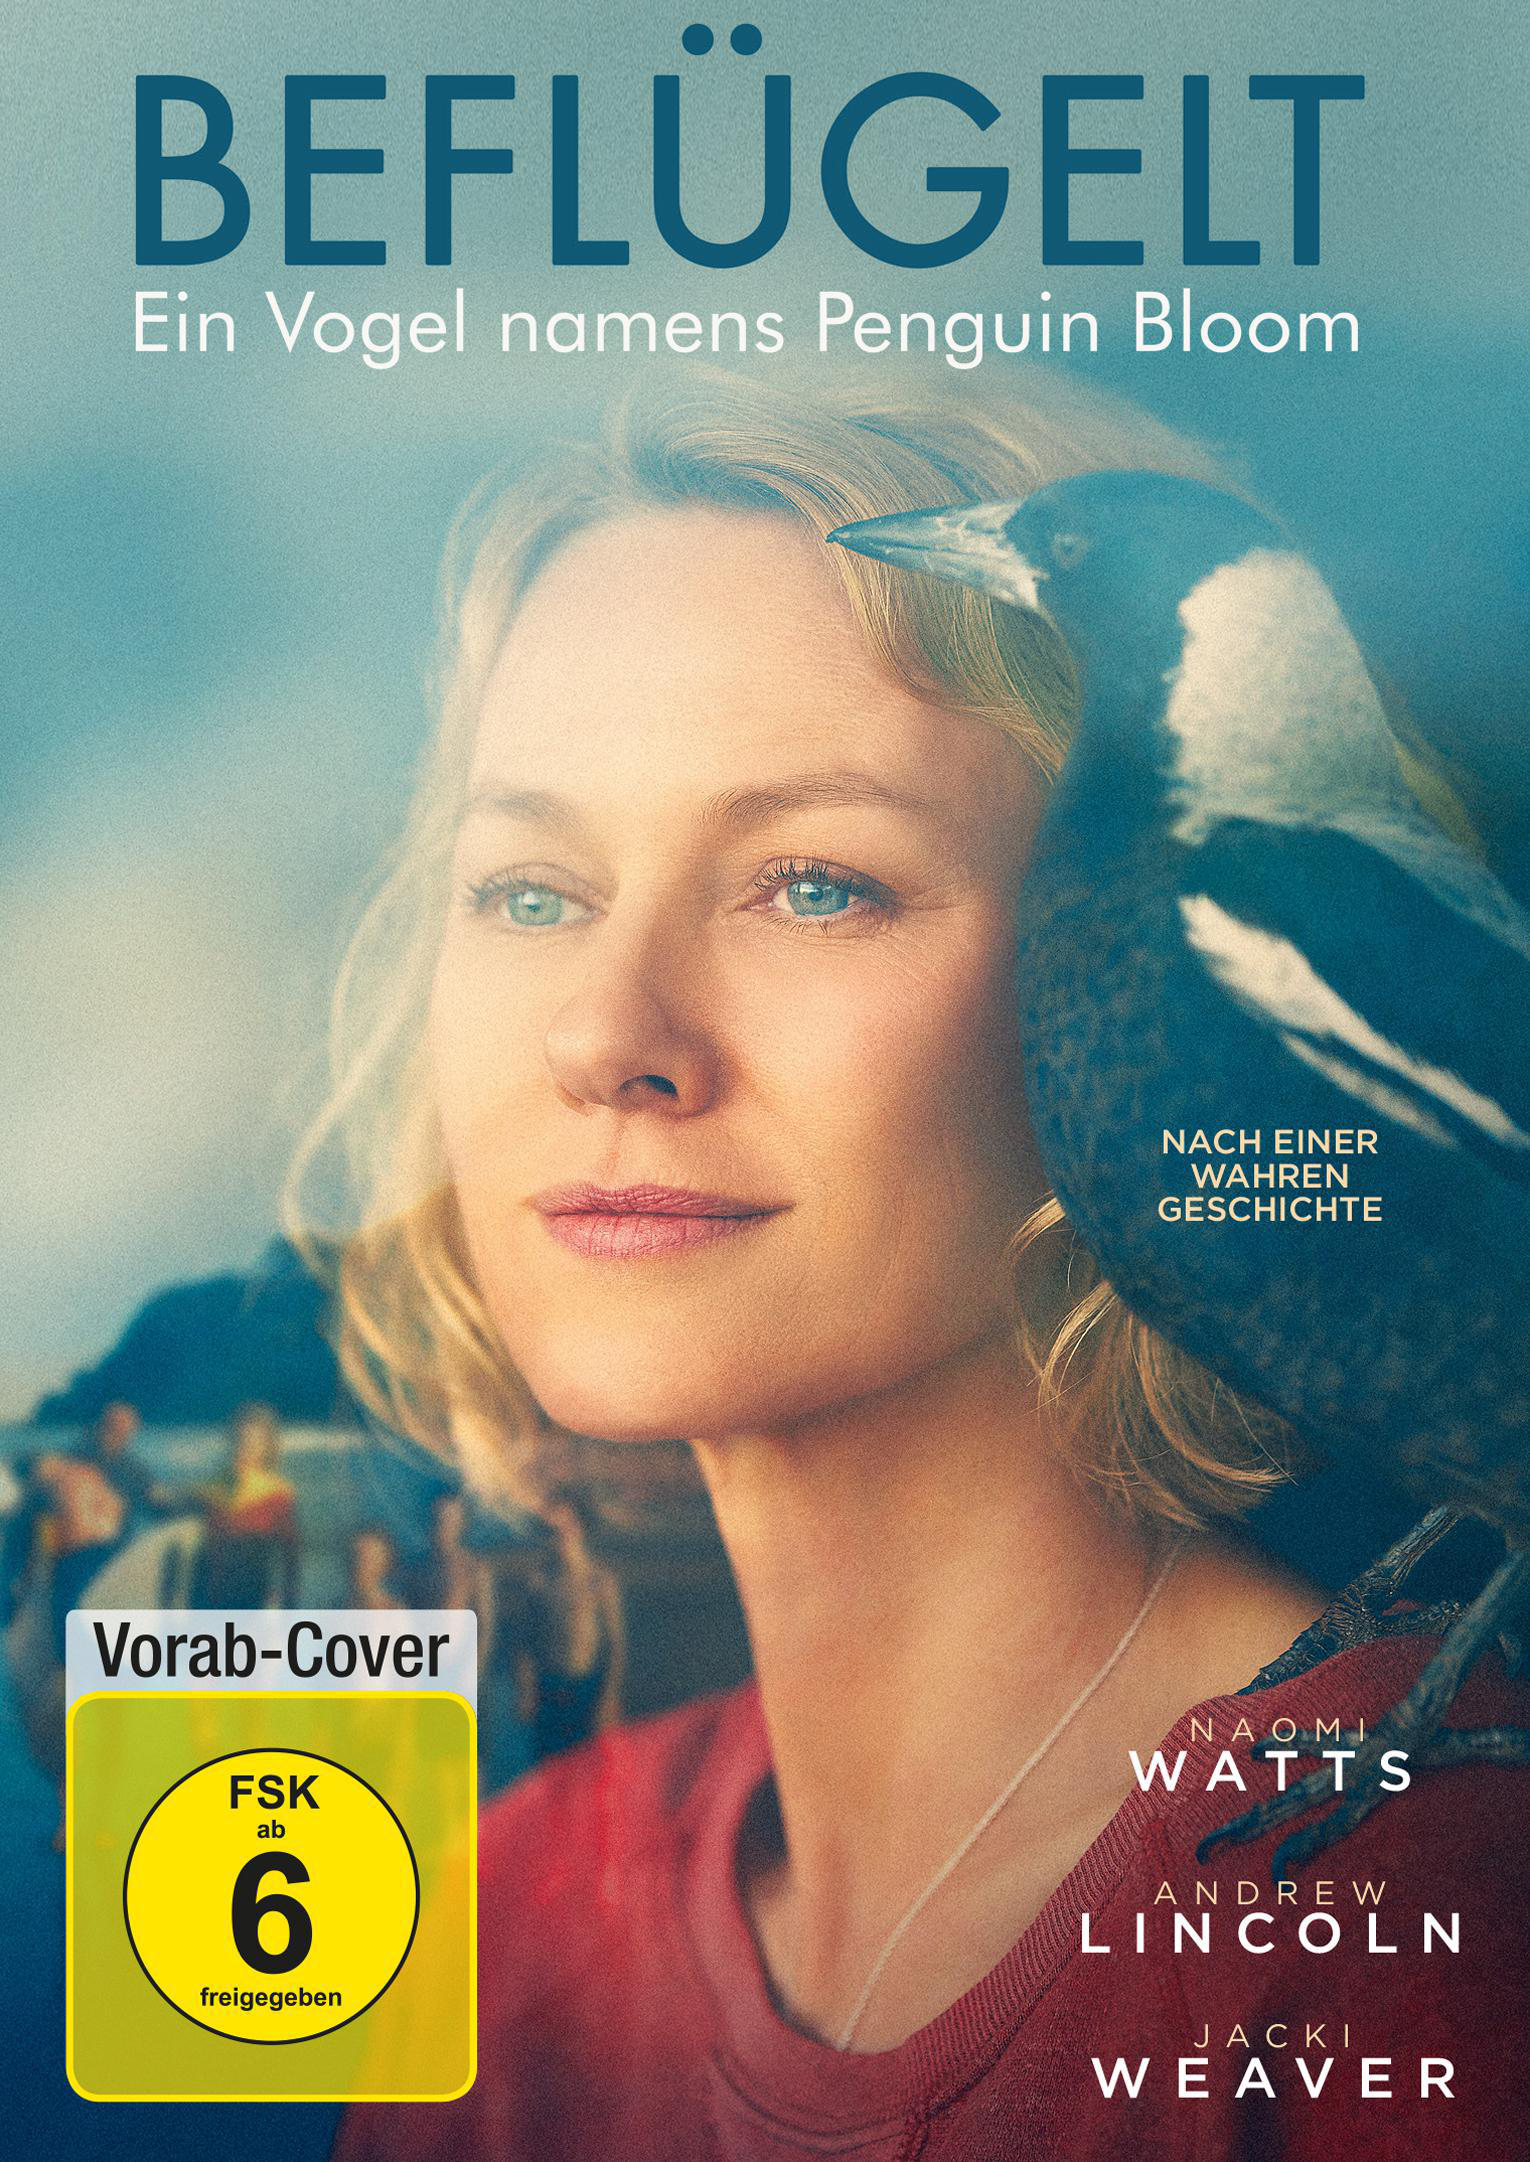 DVD - Bloom namens Vogel Penguin Ein Beflügelt